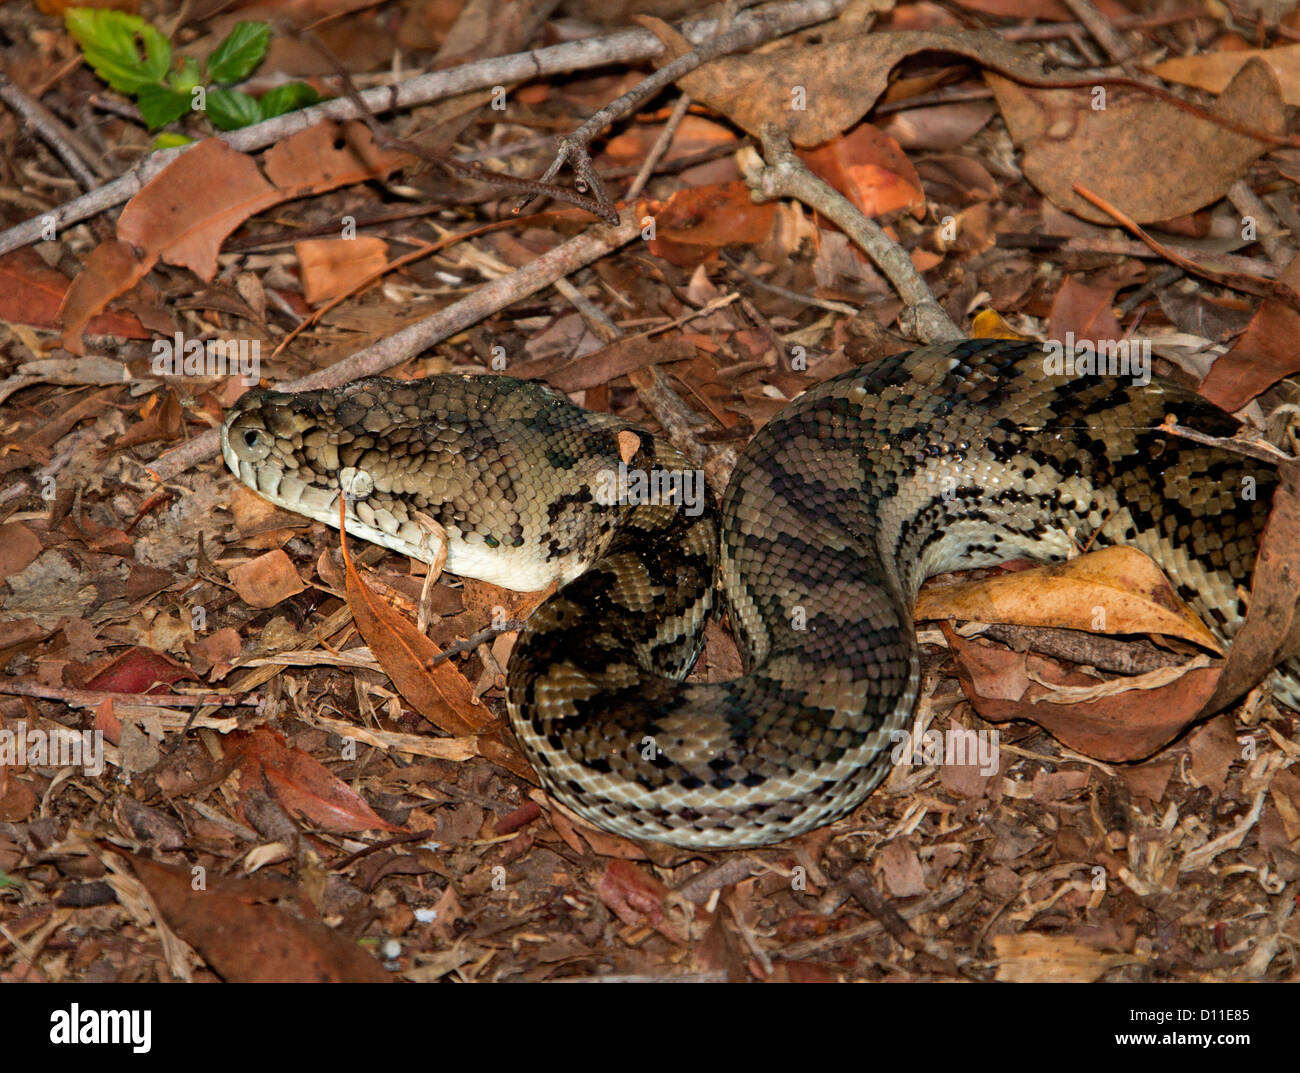 Australian carpet python, a snake moving across dry brown leaves on forest floor in Queensland Australia Stock Photo